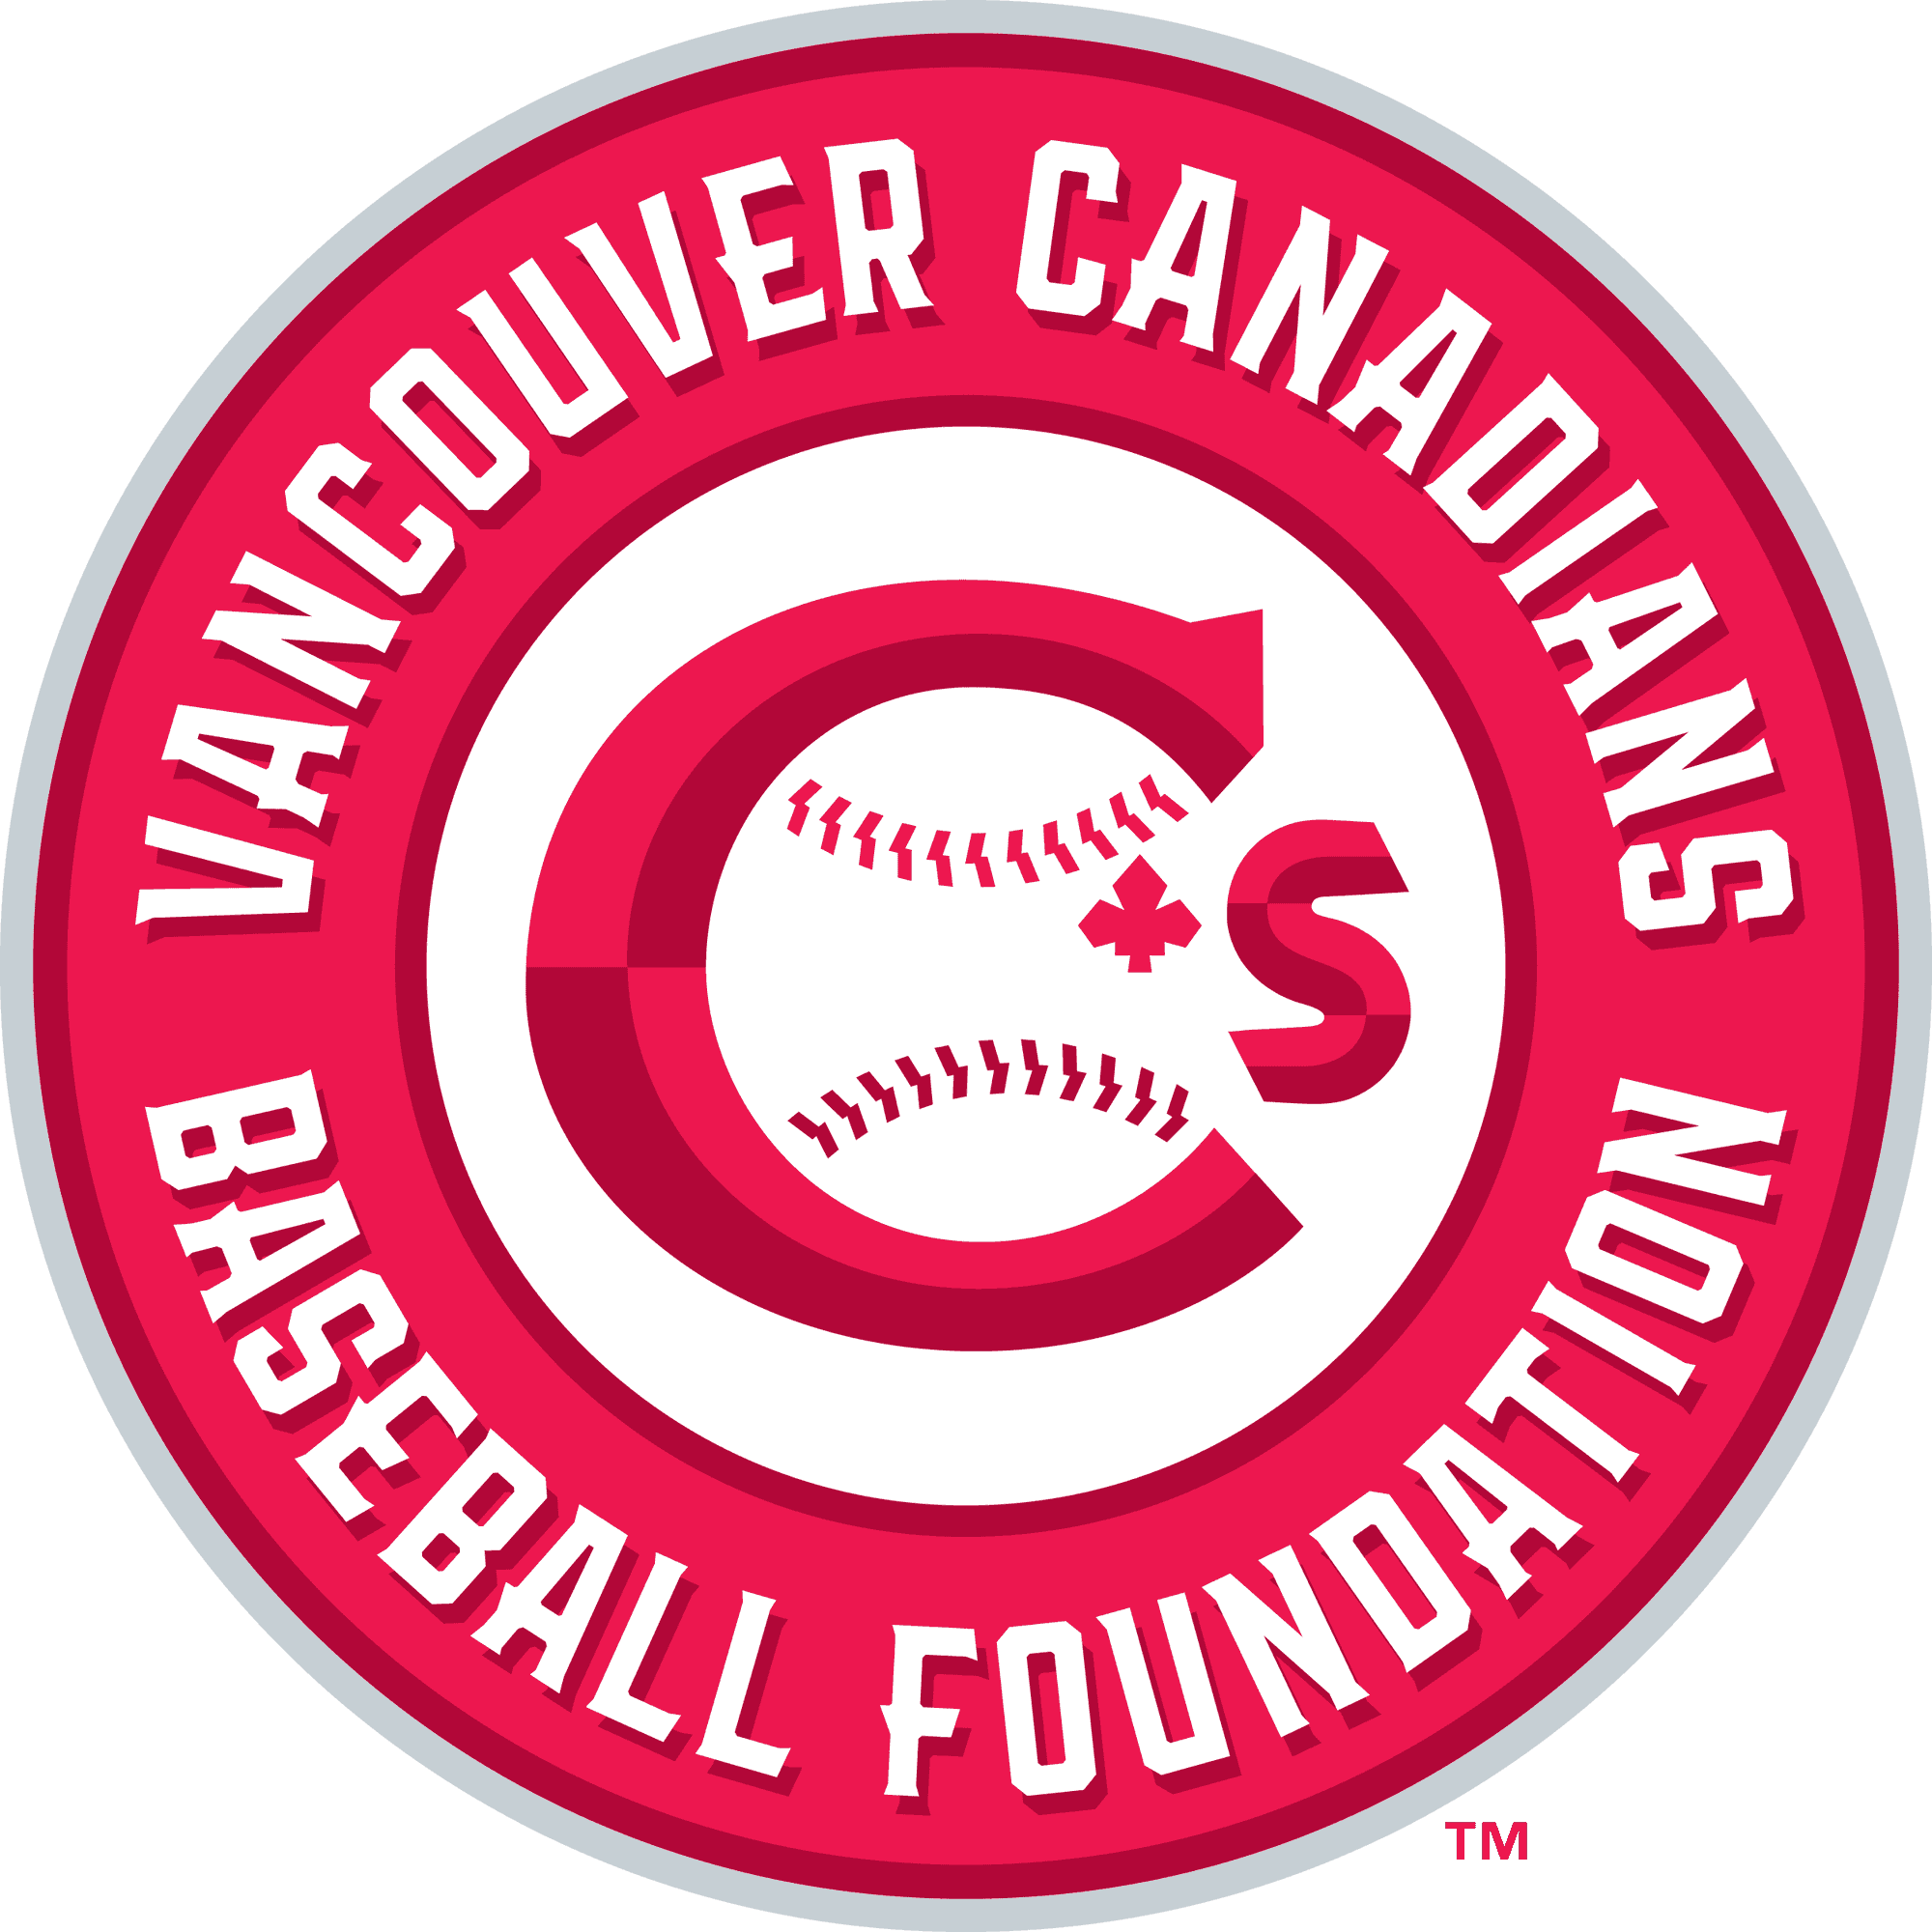 Vancouver Canadians Baseball Foundation logo